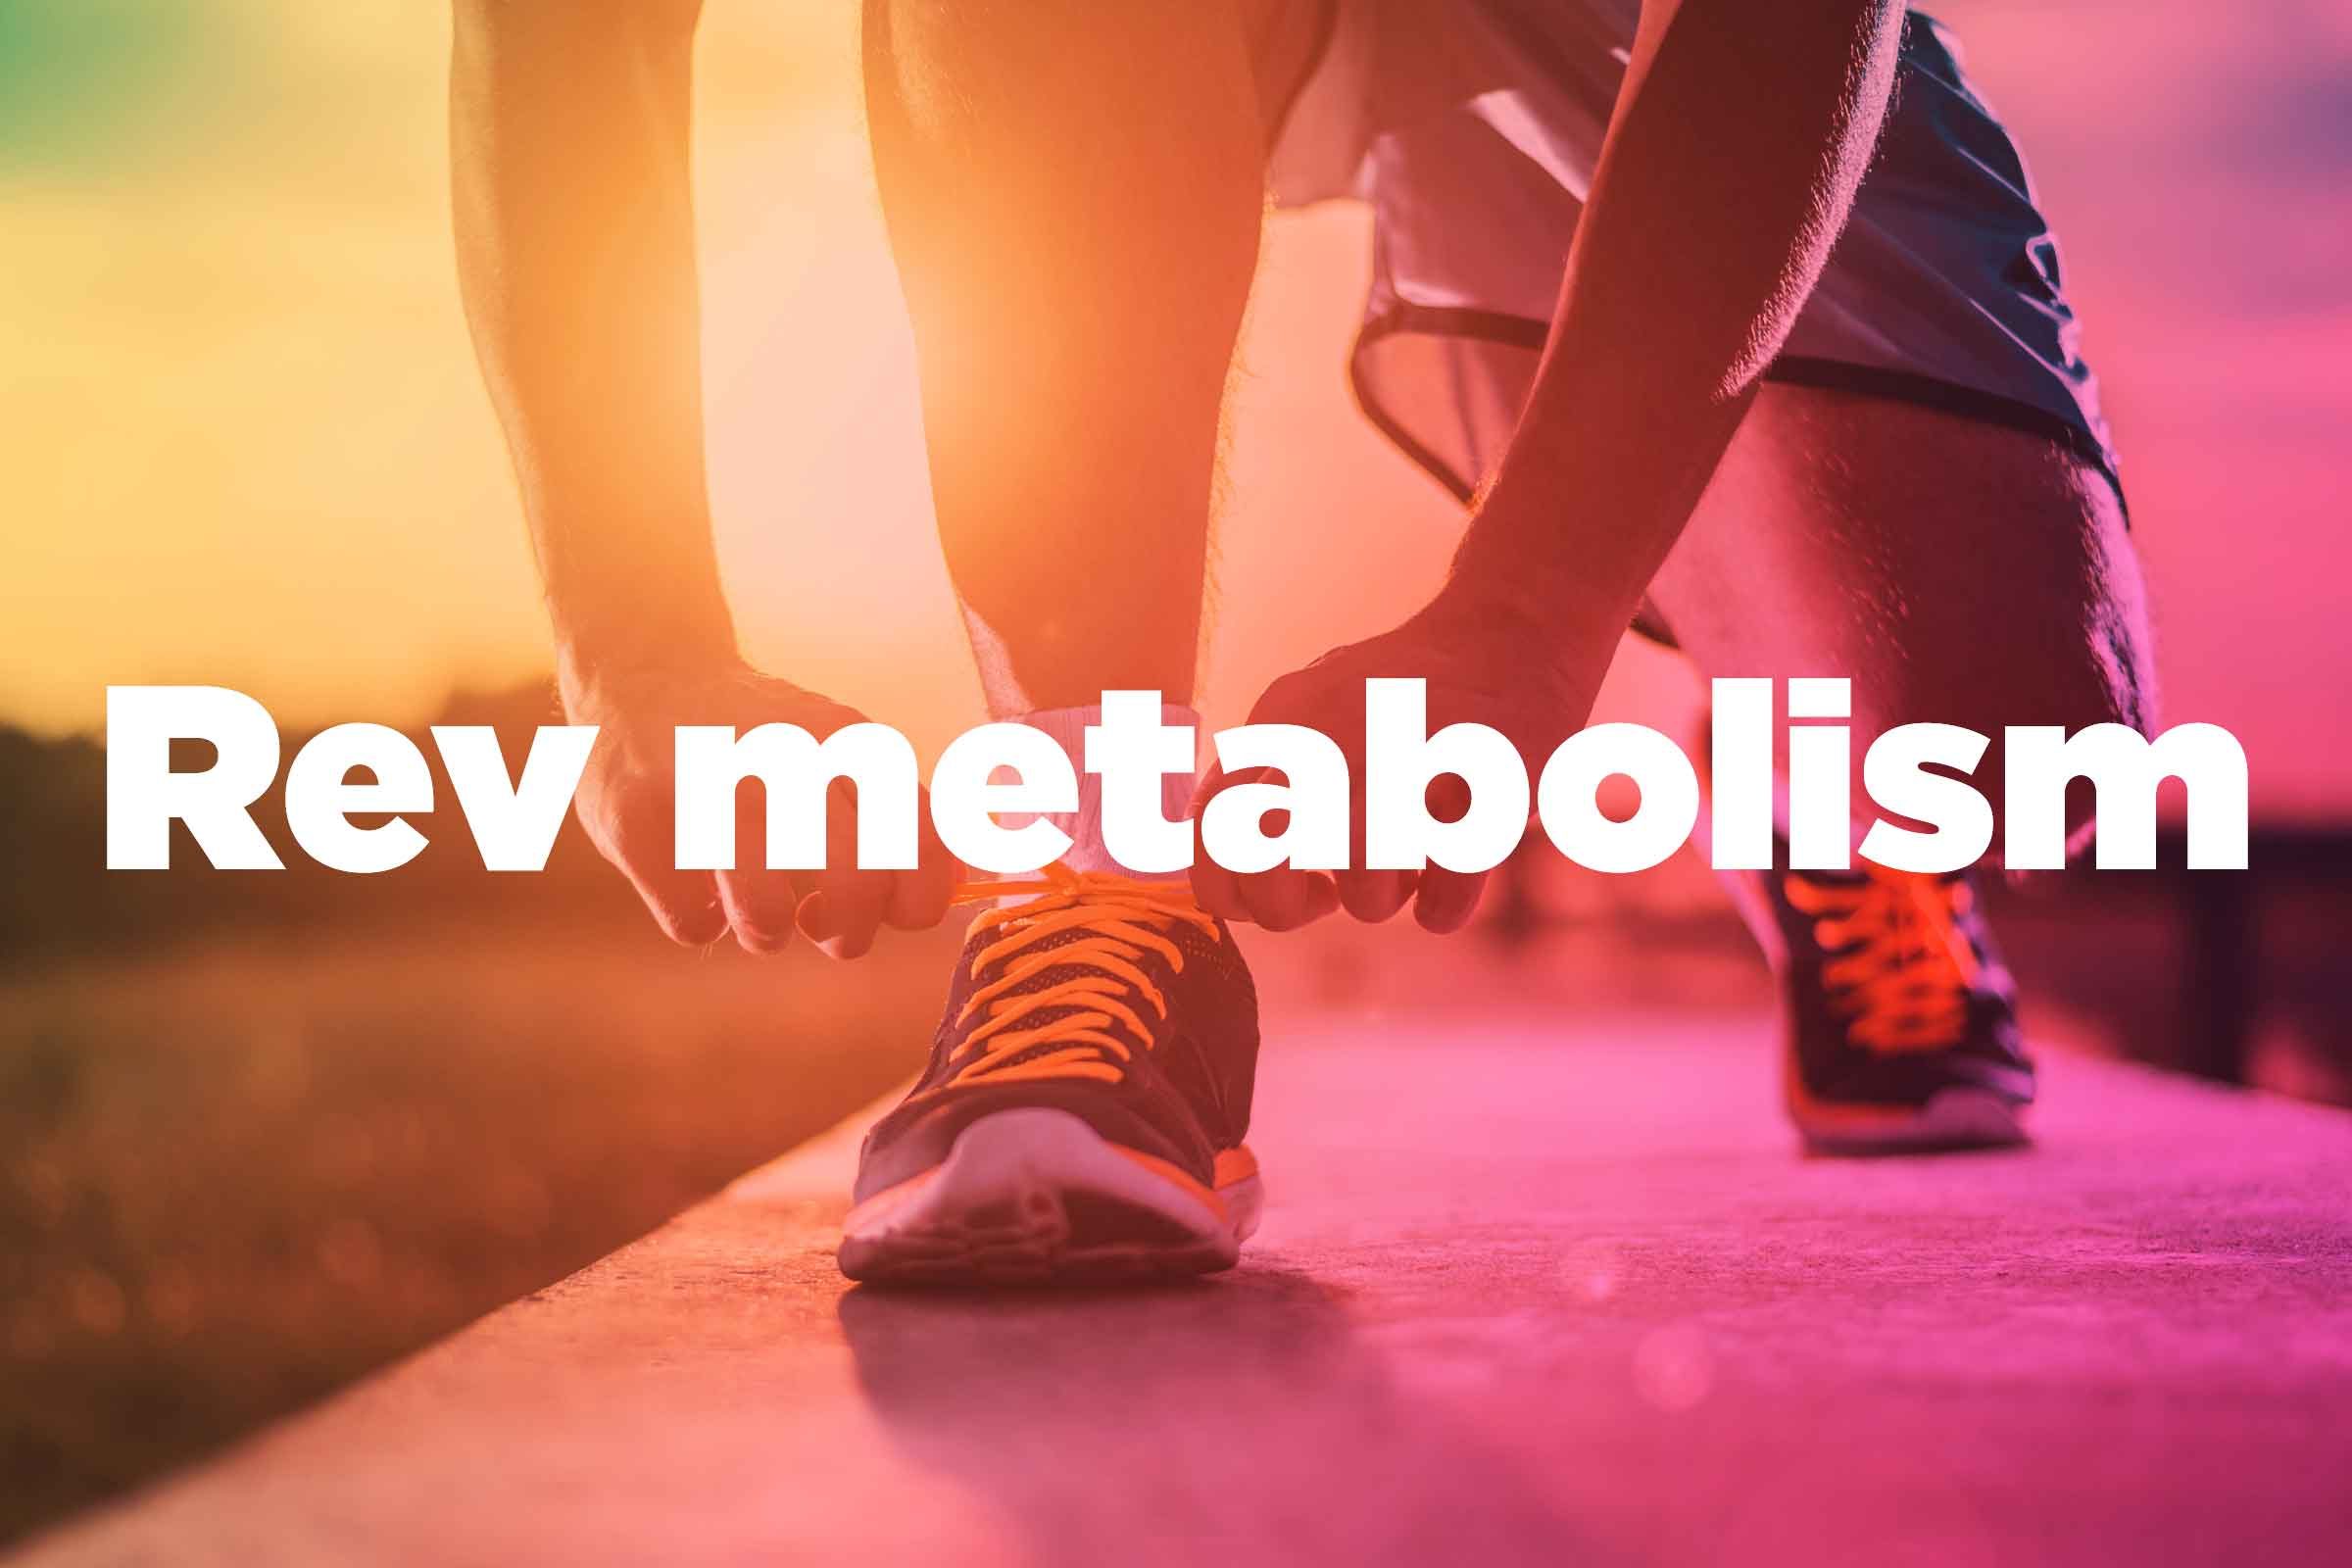 Text on background image of runner: "Rev metabolism."